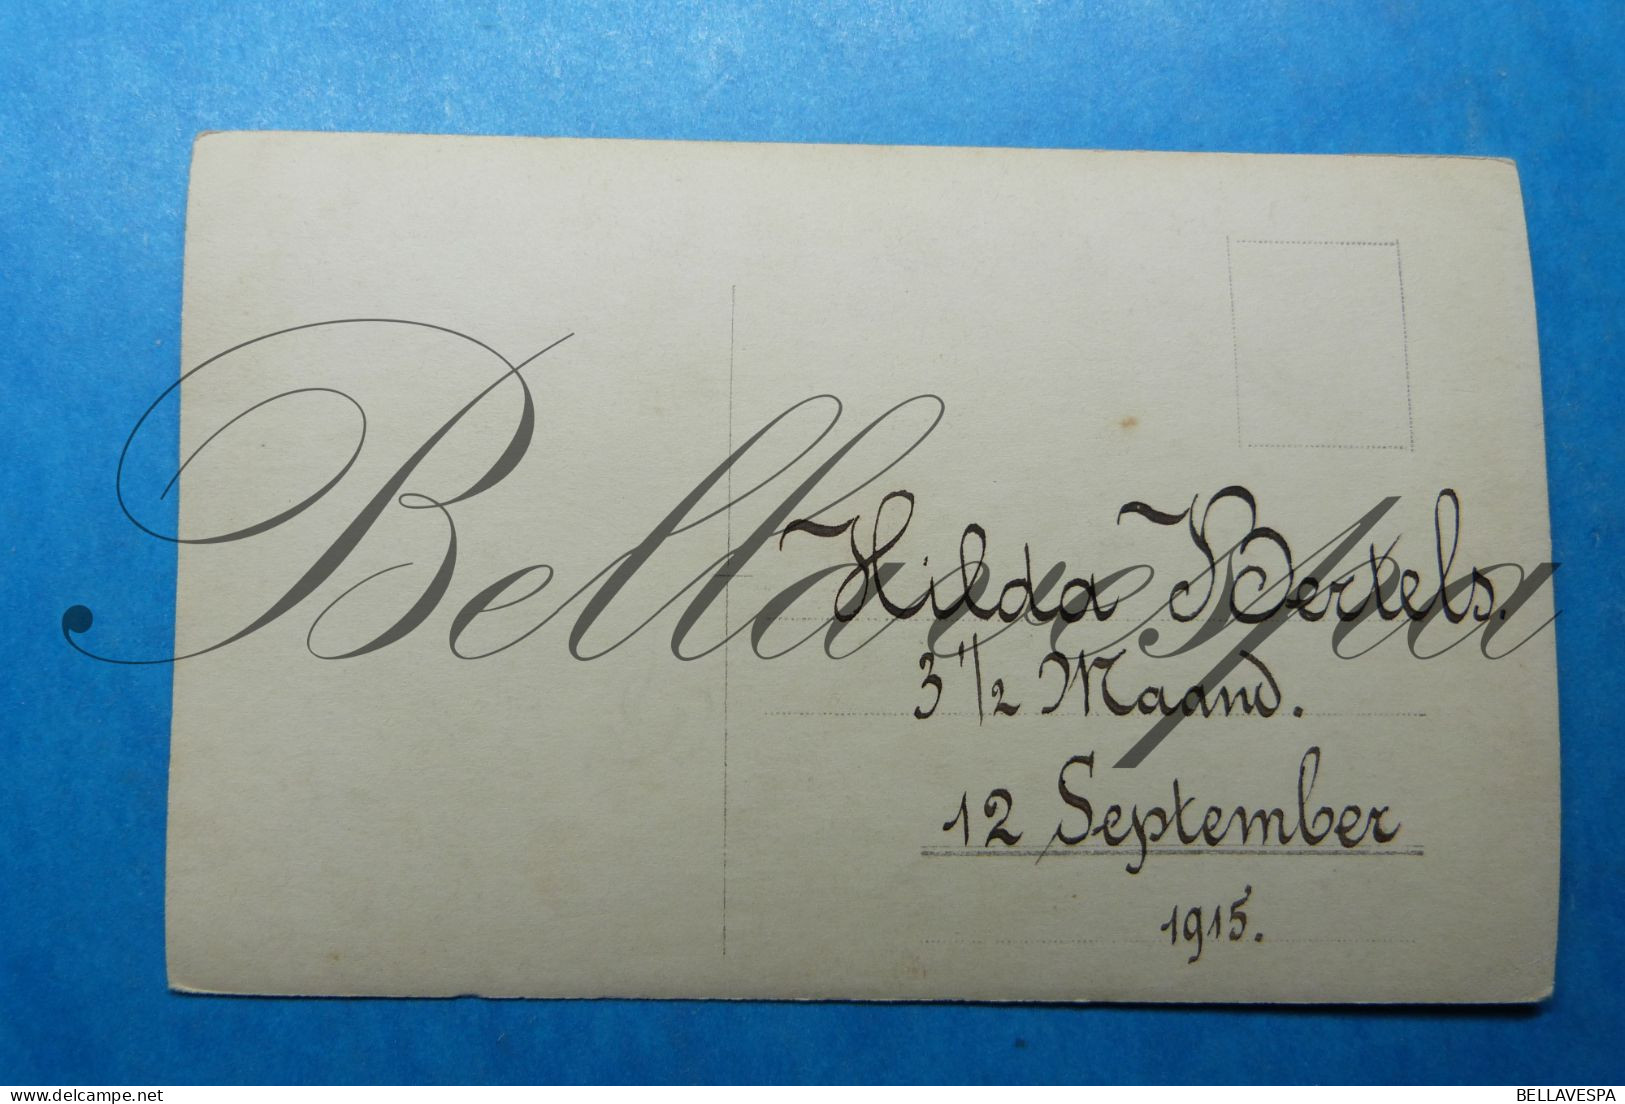 Carte Photo Bebe Hilda Berteles 3 ,5 Maand - 12 September 1915 - Genealogy